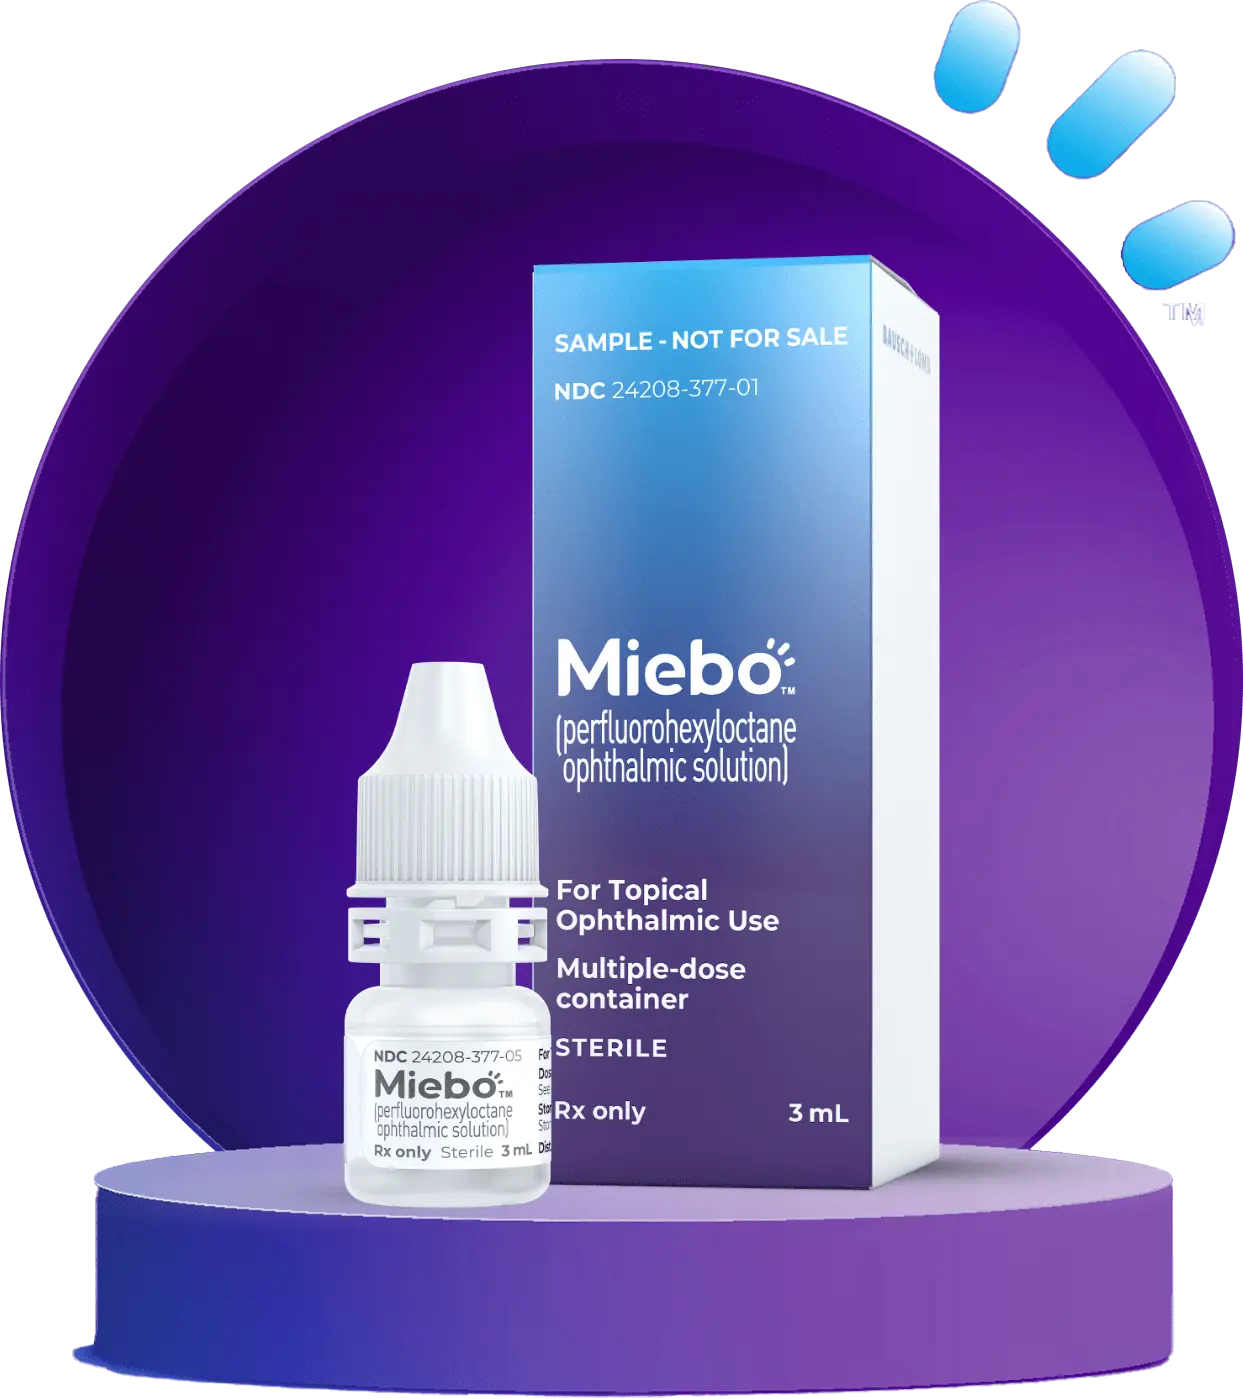 Miebo eyedrop bottle next to a box with the Miebo logo